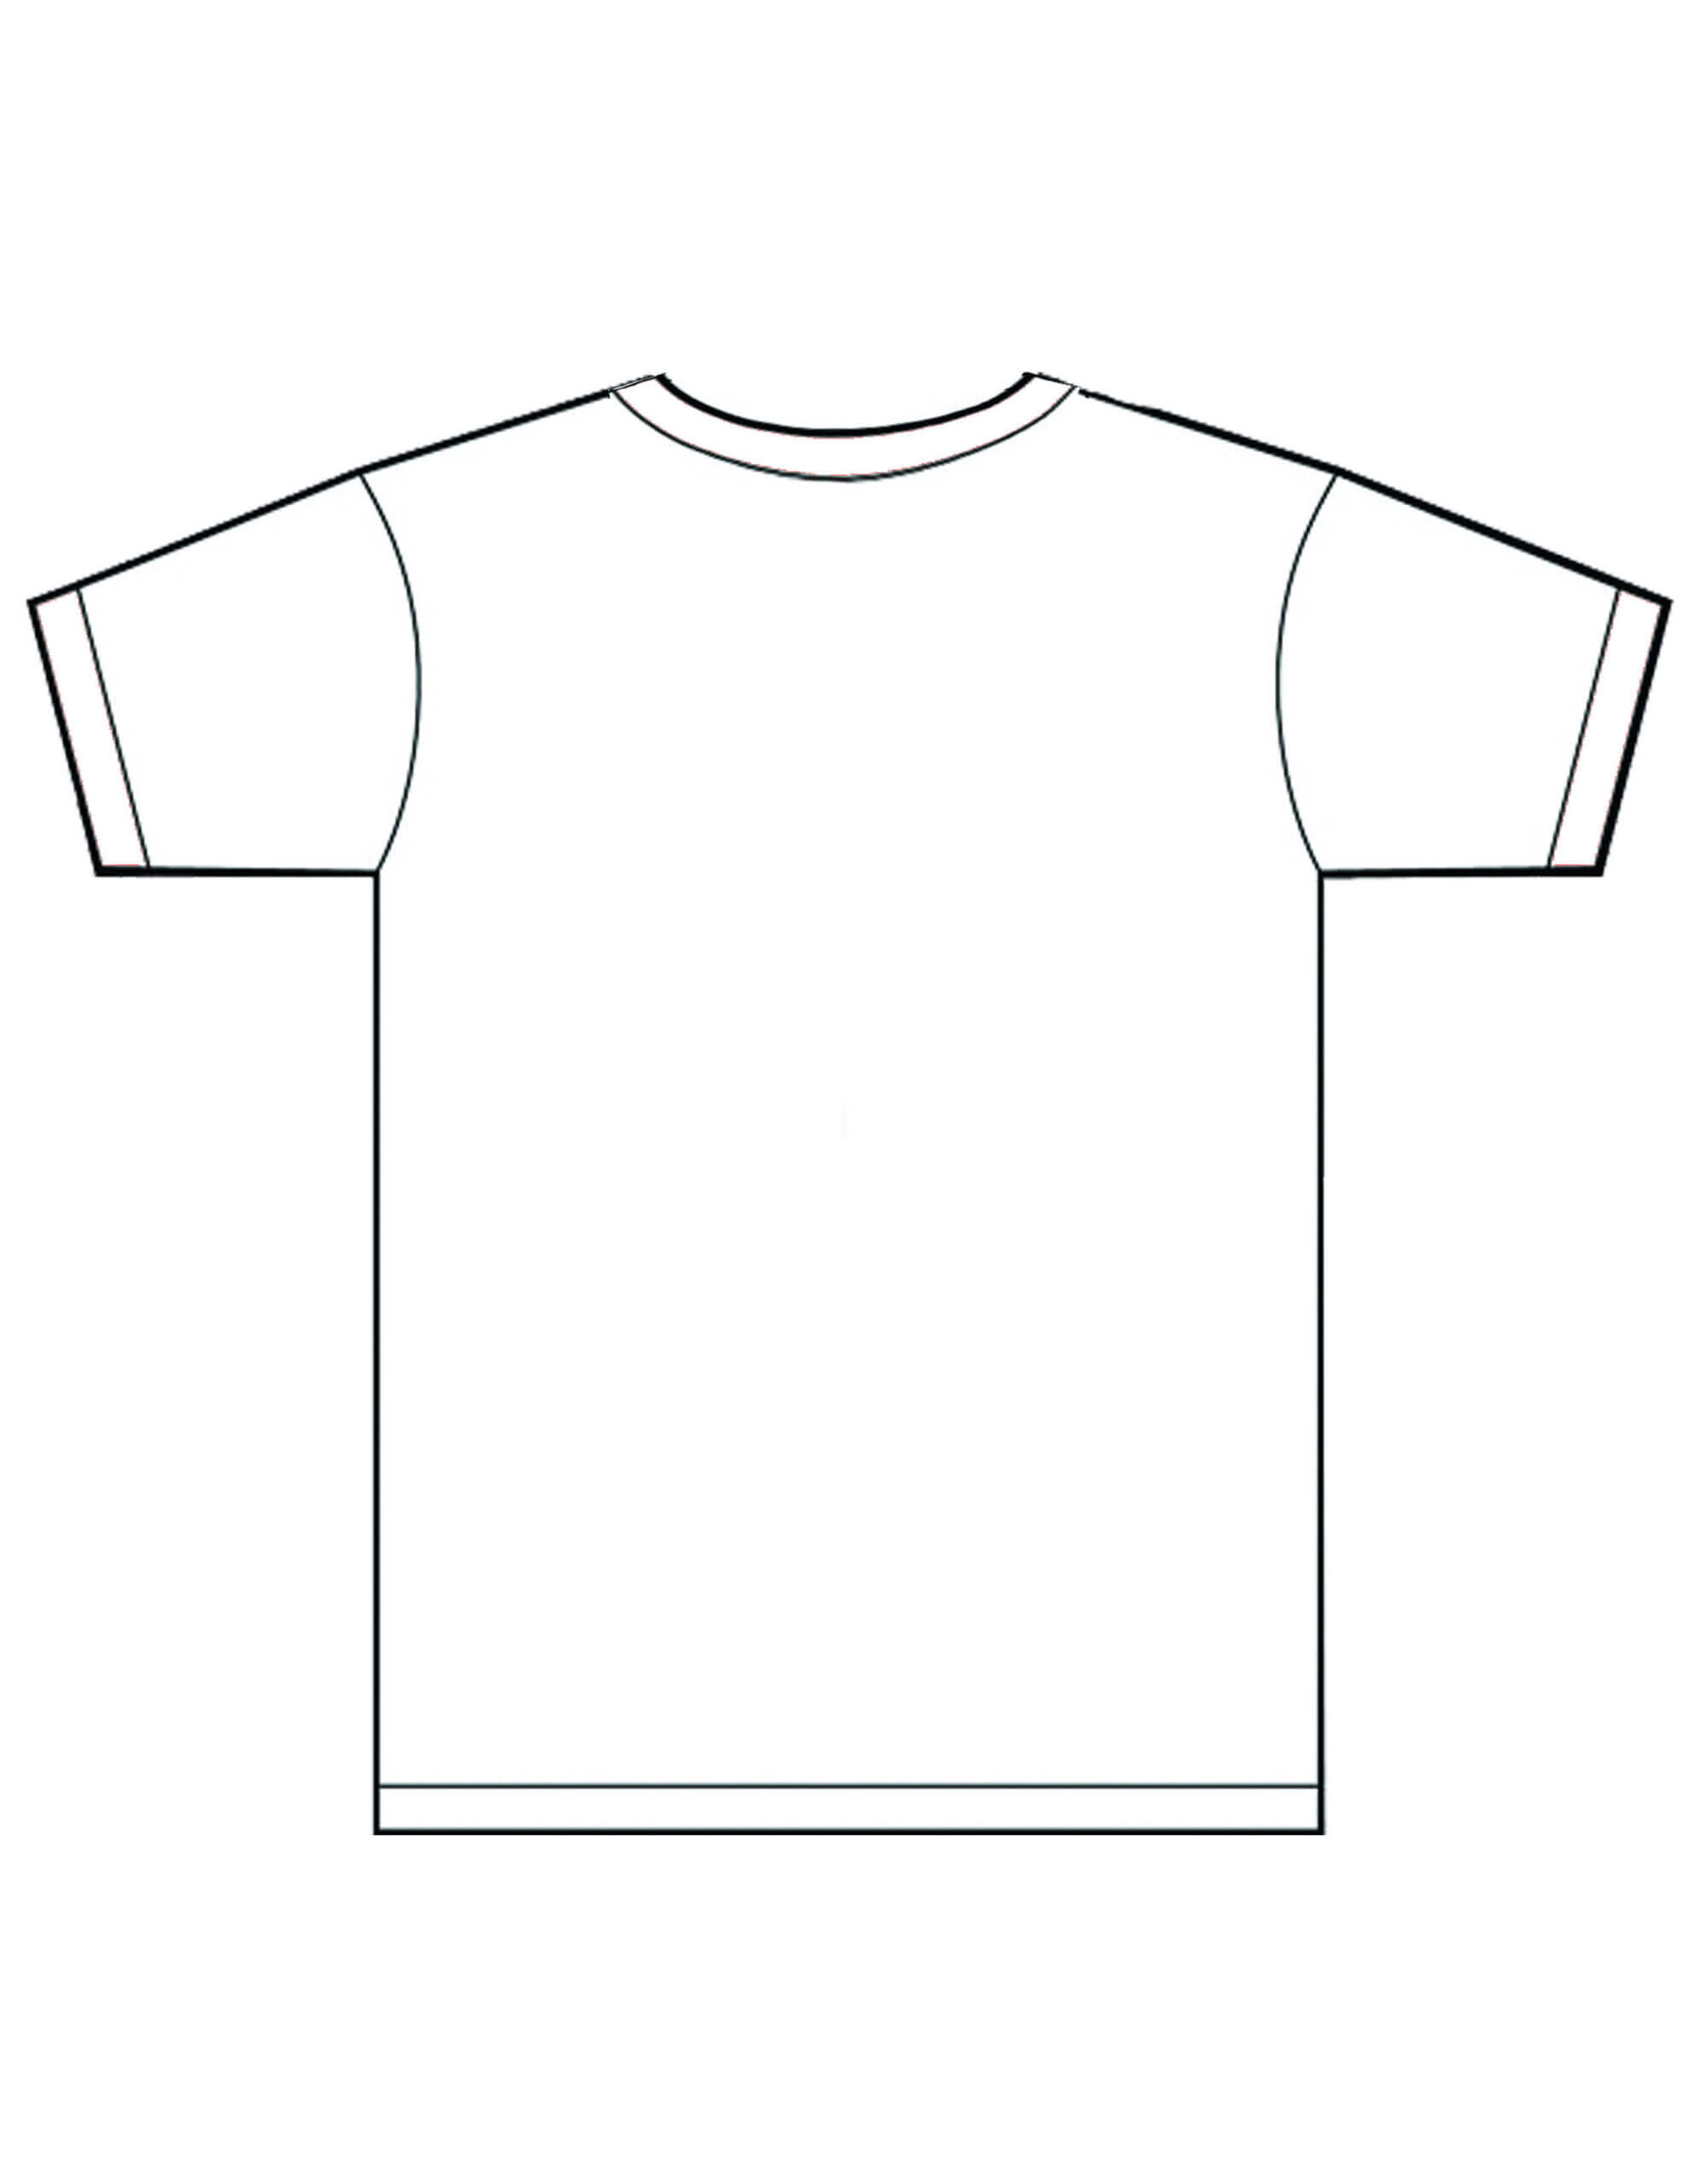 t-shirt-template-photoshop-ironi-celikdemirsan-inside-blank-tee-shirt-template-professional